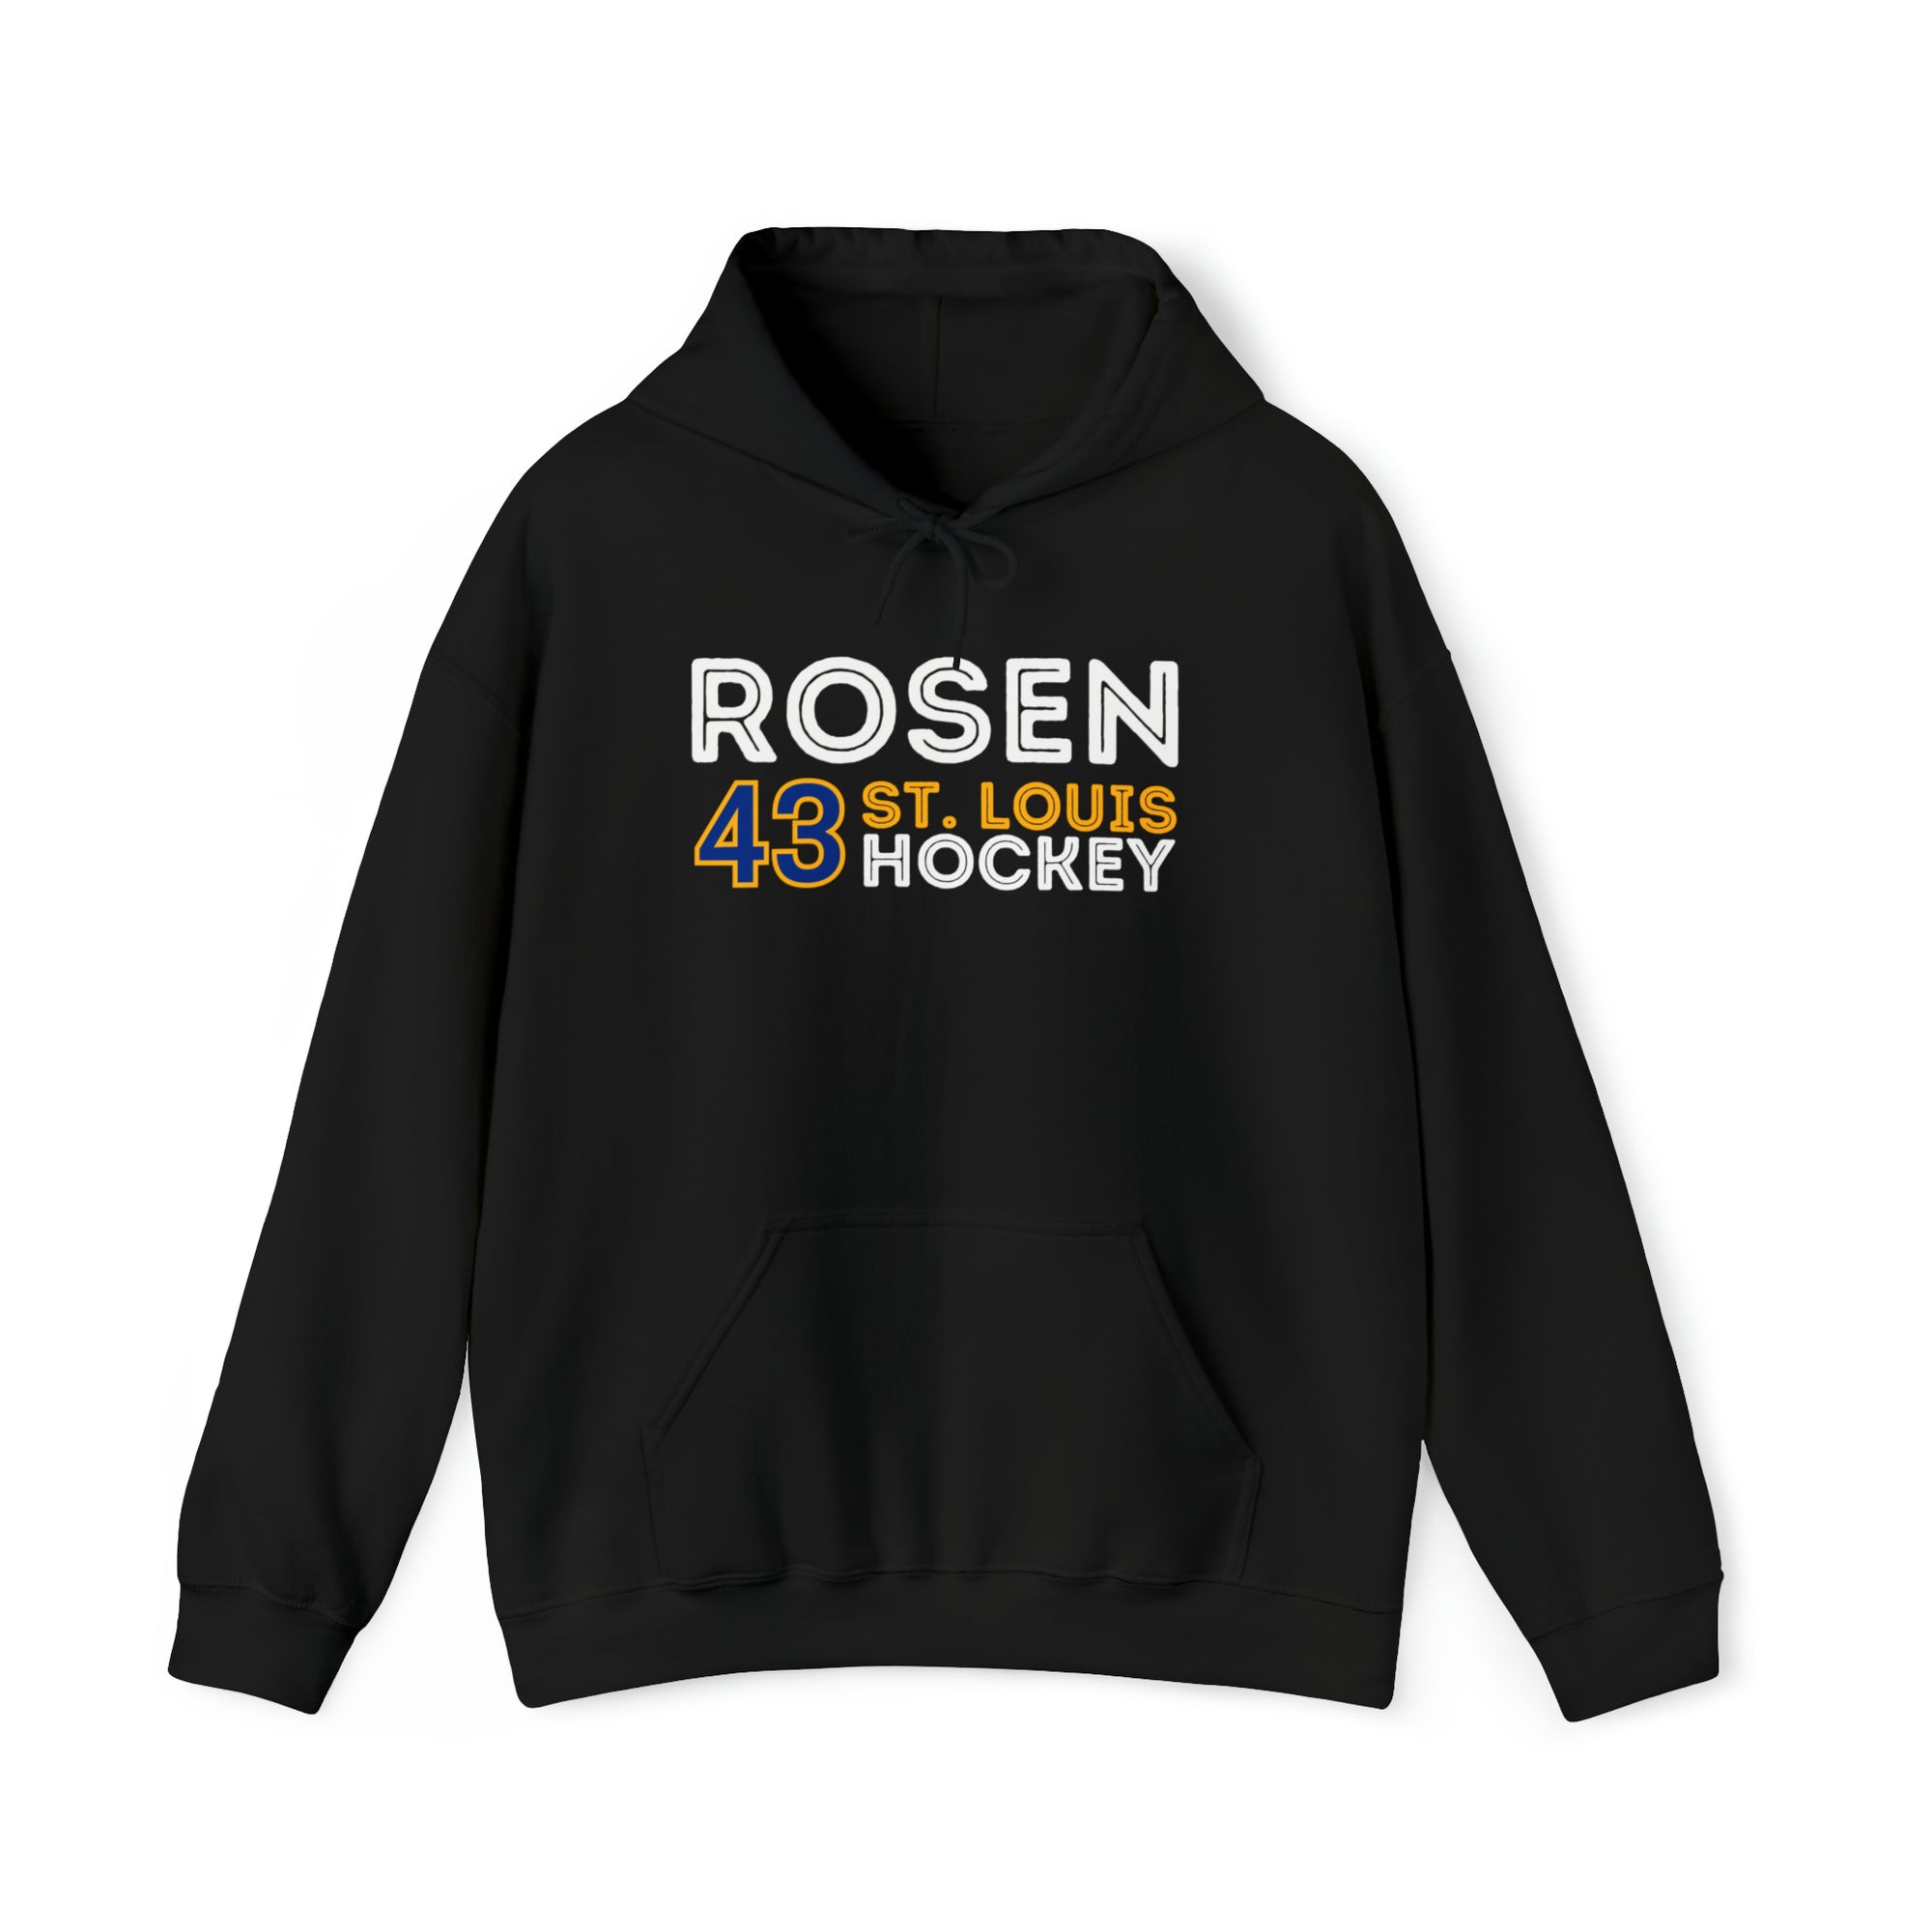 Rosen 43 St. Louis Hockey Grafitti Wall Design Unisex Hooded Sweatshirt